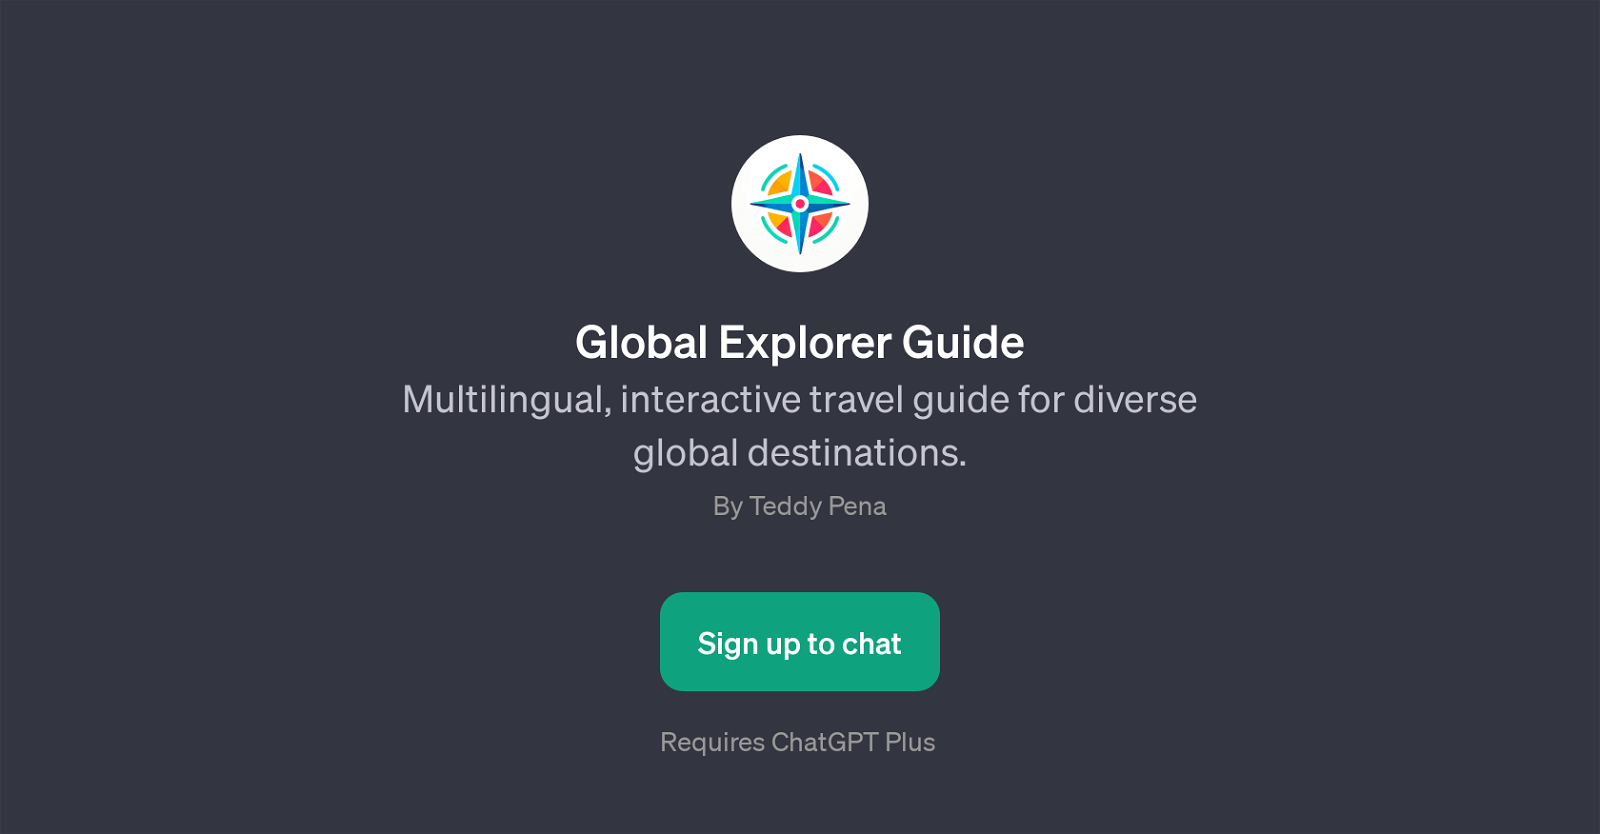 Global Explorer Guide website